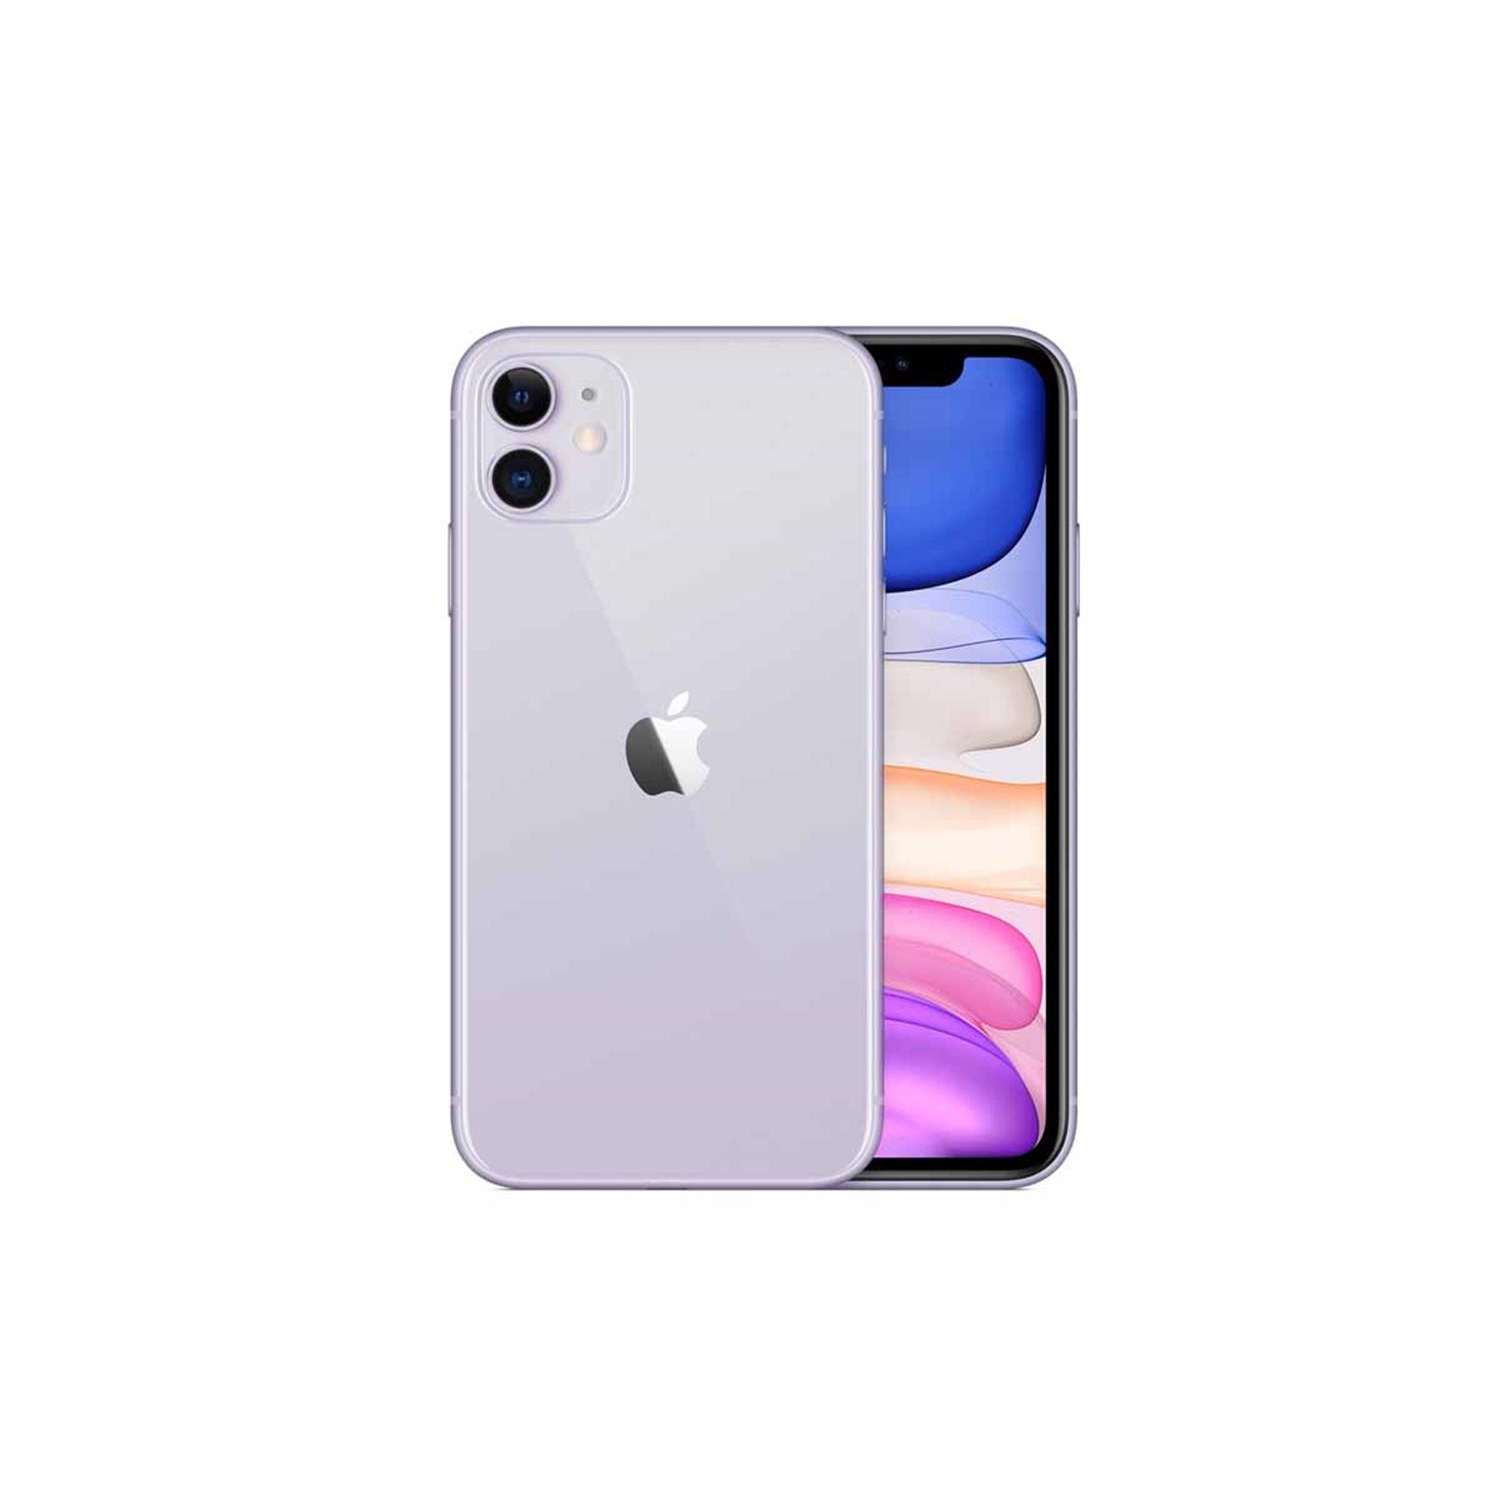 Refurbished (Excellent) - Apple iPhone 11 128GB Smartphone - Purple - Unlocked - Certified Refurbished